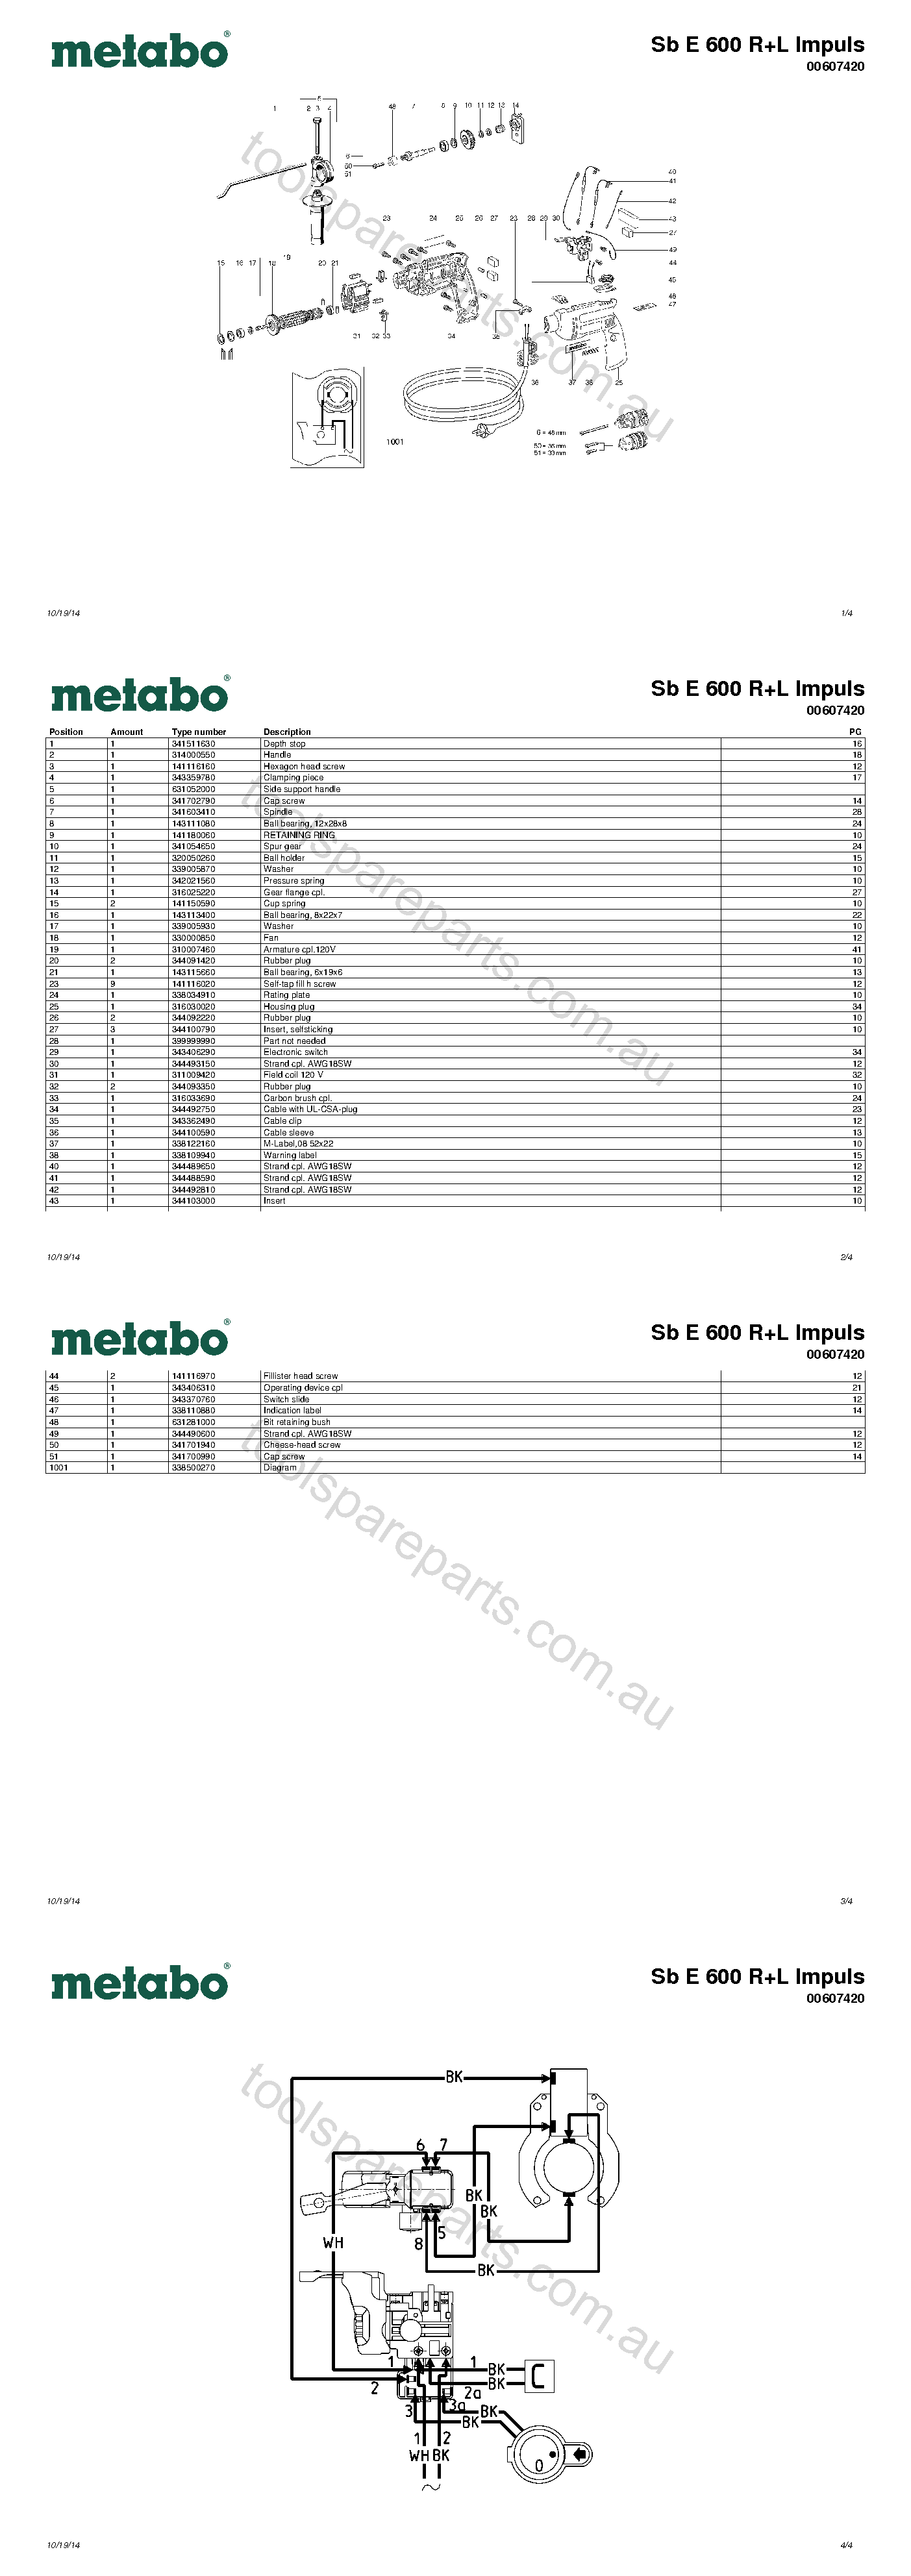 Metabo Sb E 600 R+L Impuls 00607420  Diagram 1